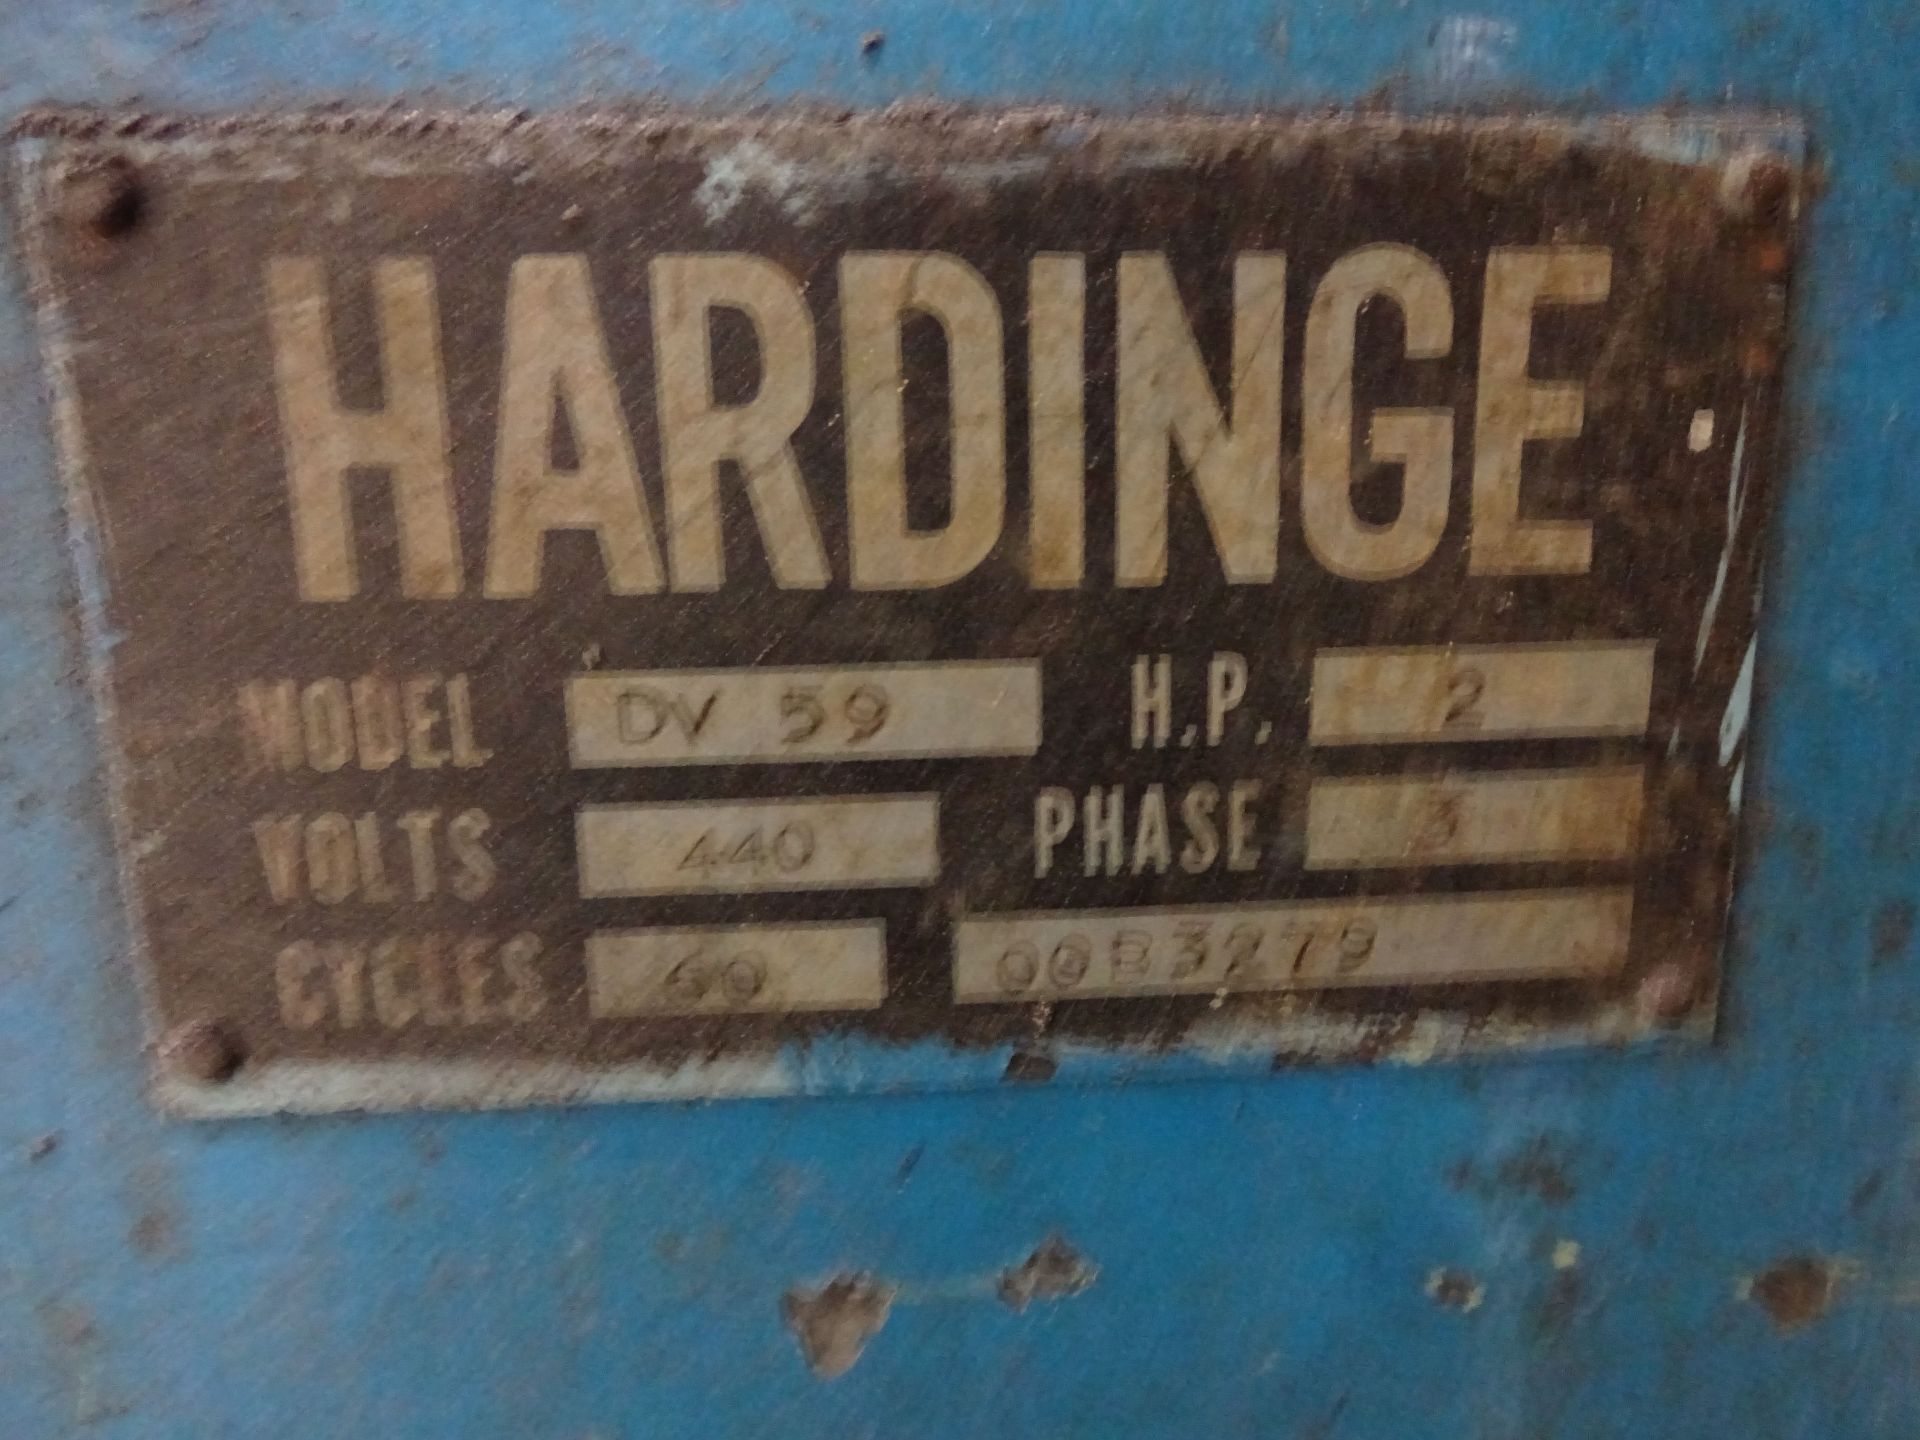 HARDINGE DV-59 DOVETAIL LATHE; S/N 3279, 5" 3-JAW CHUCK, SPINDLE SPEEDS 100-2,600 RPM - Image 5 of 5